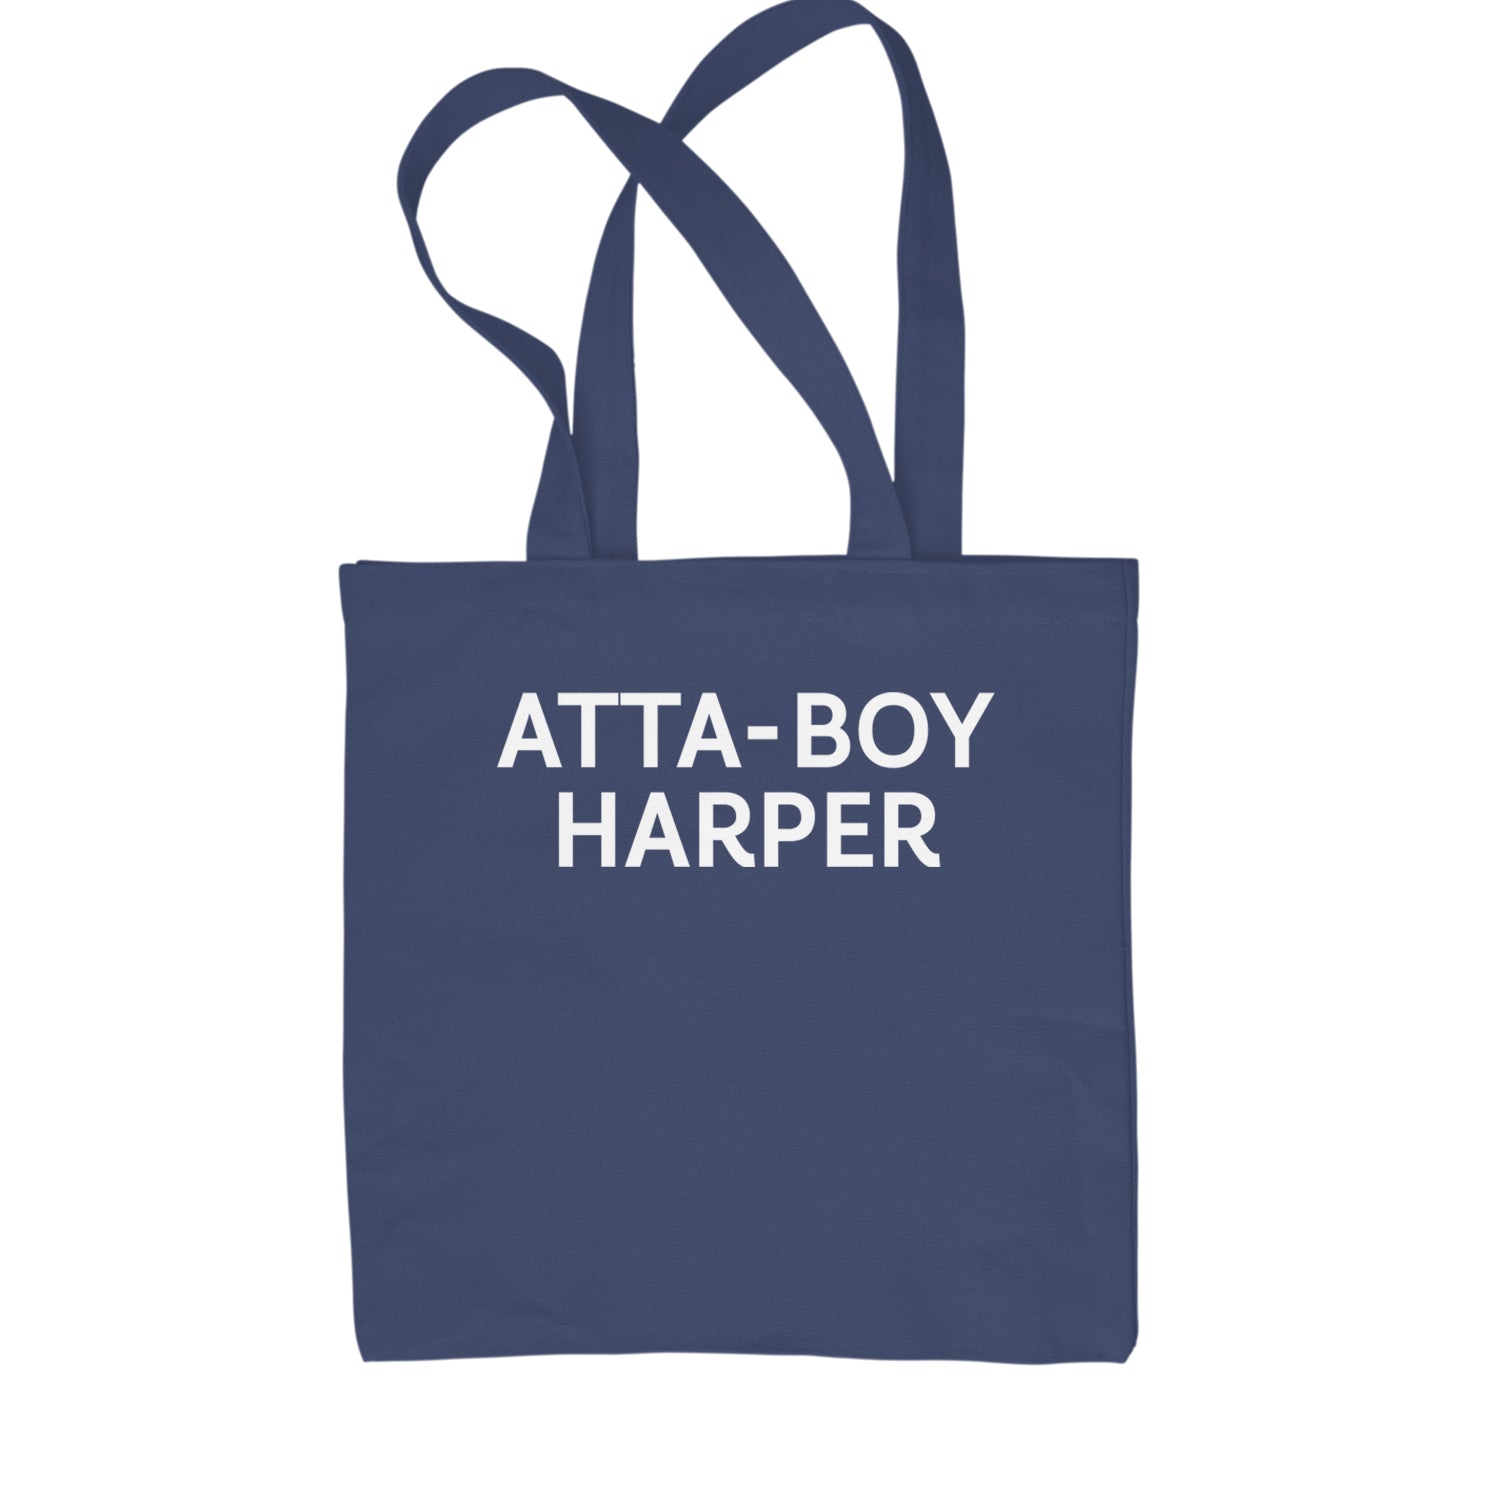 Atta-Boy Harper Philadelphia Shopping Tote Bag Navy Blue